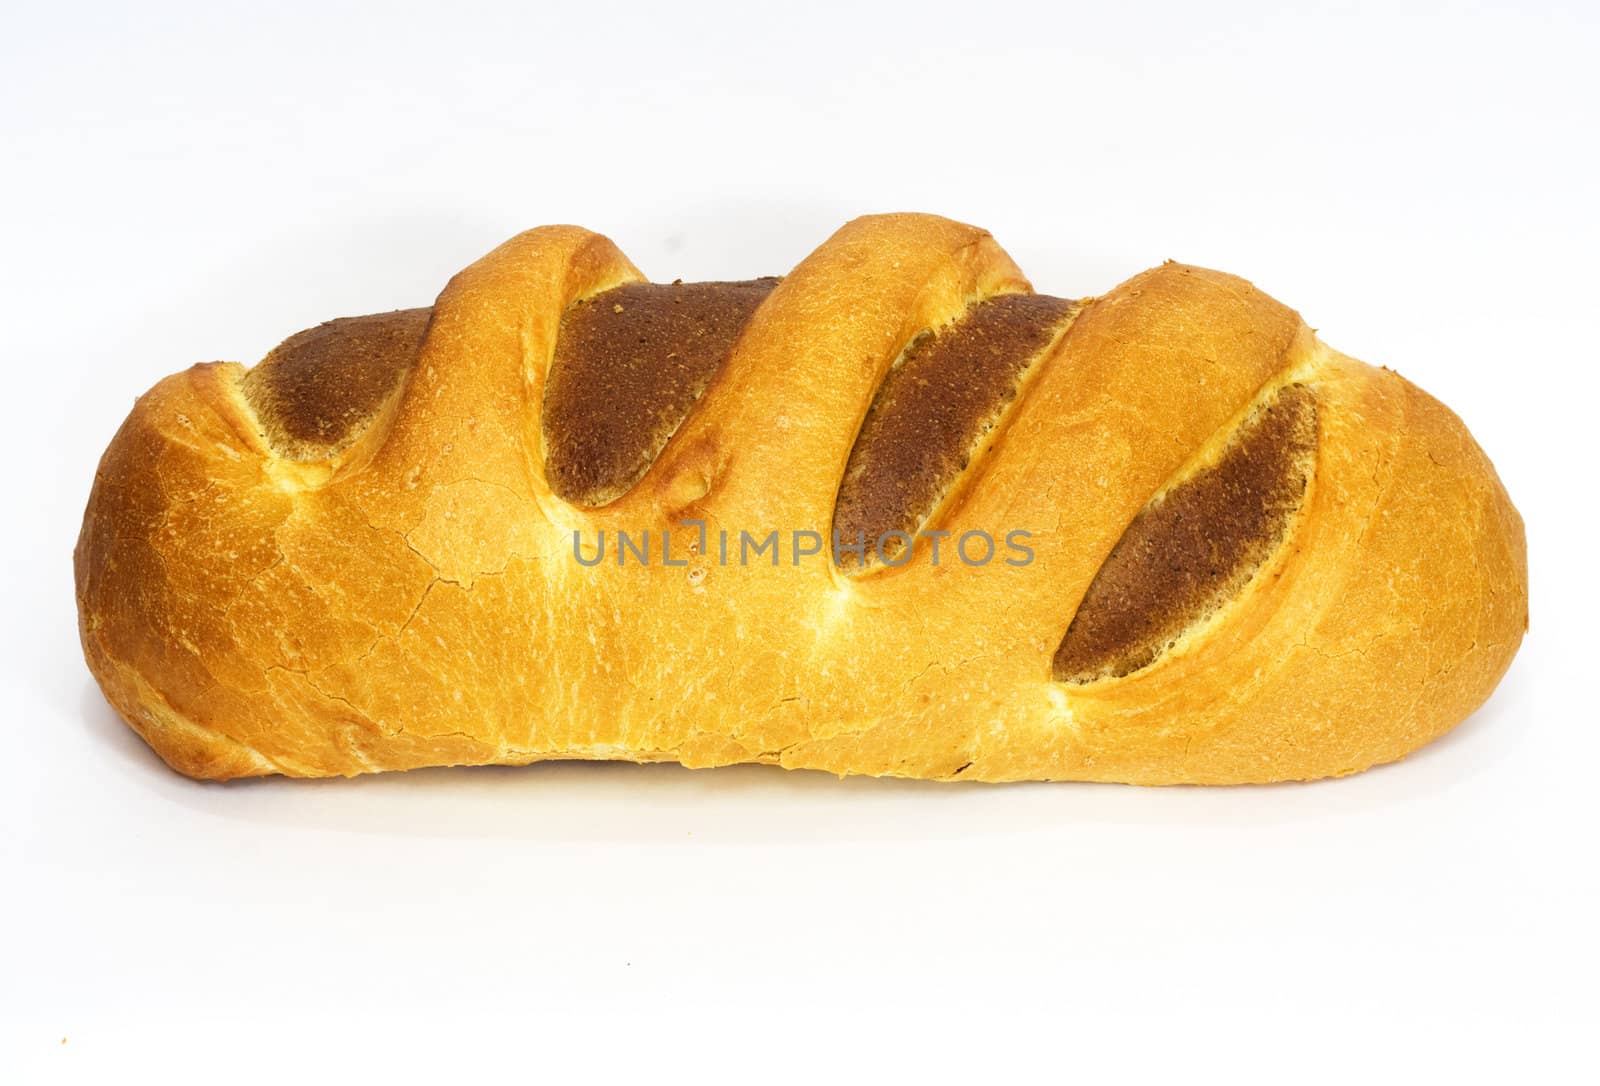 yummy juicy bread on a white background  by schankz